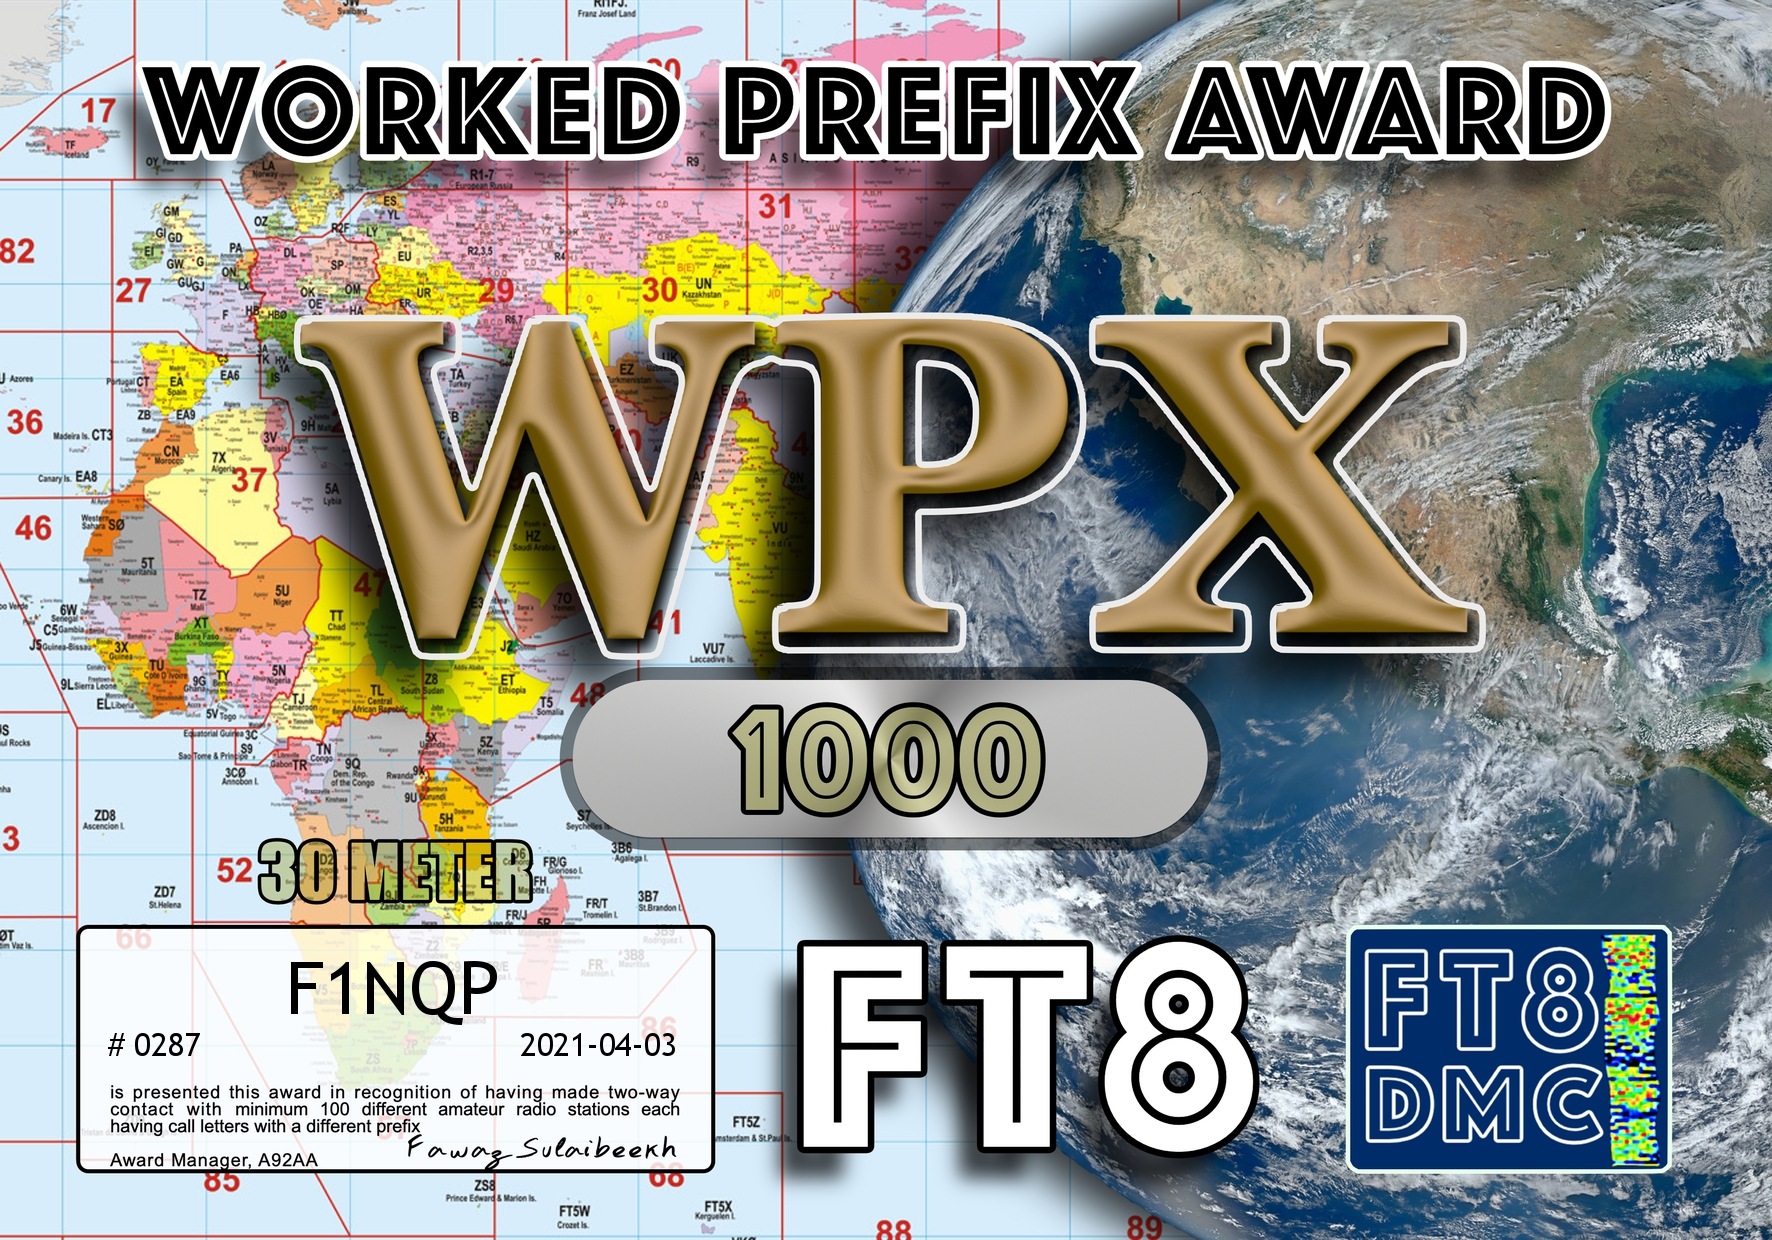 F1NQP-WPX30-1000_FT8DMC.jpg